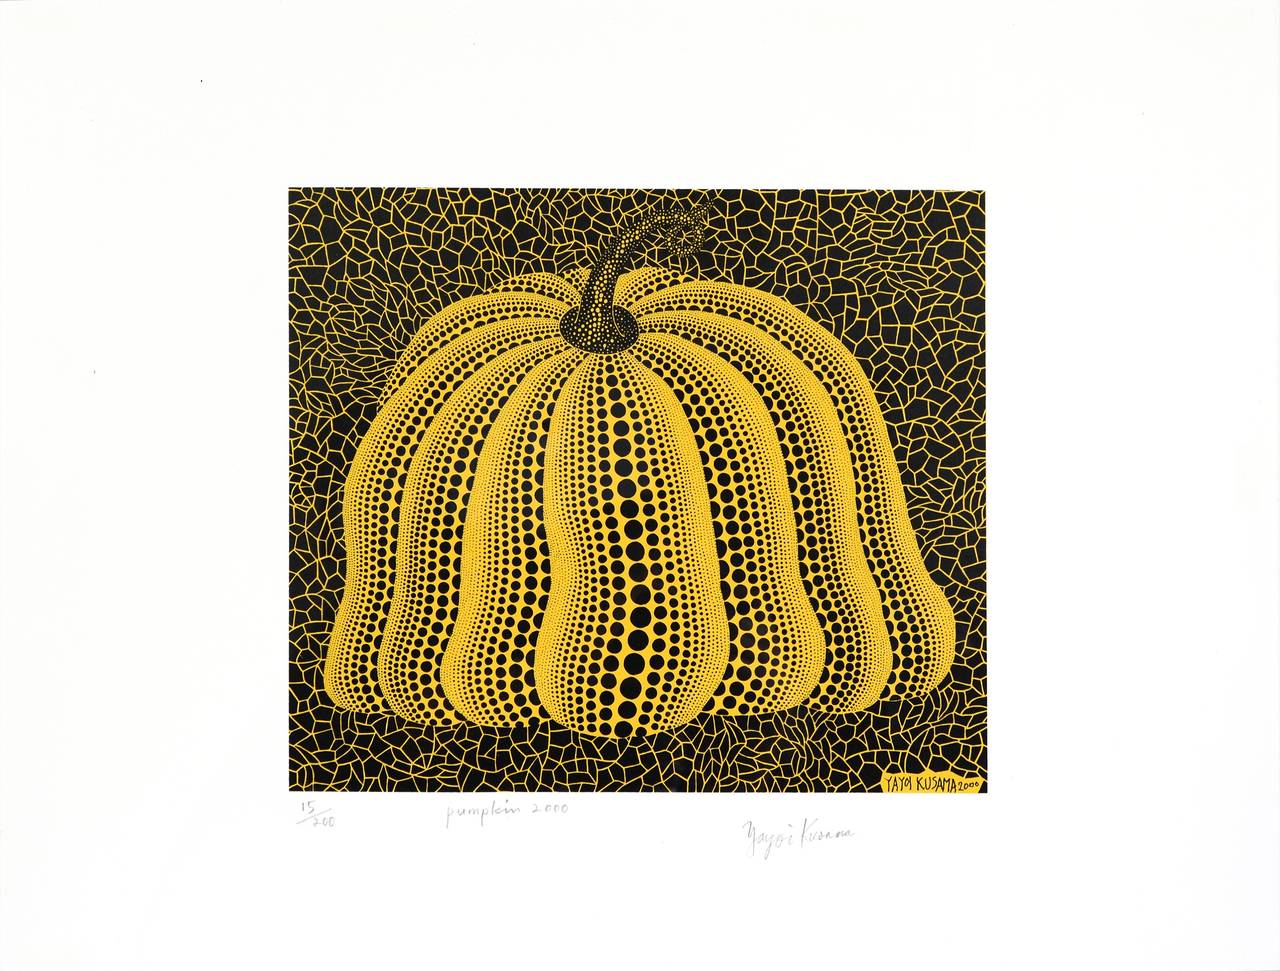 Pumpkin 2000 - Print by Yayoi Kusama